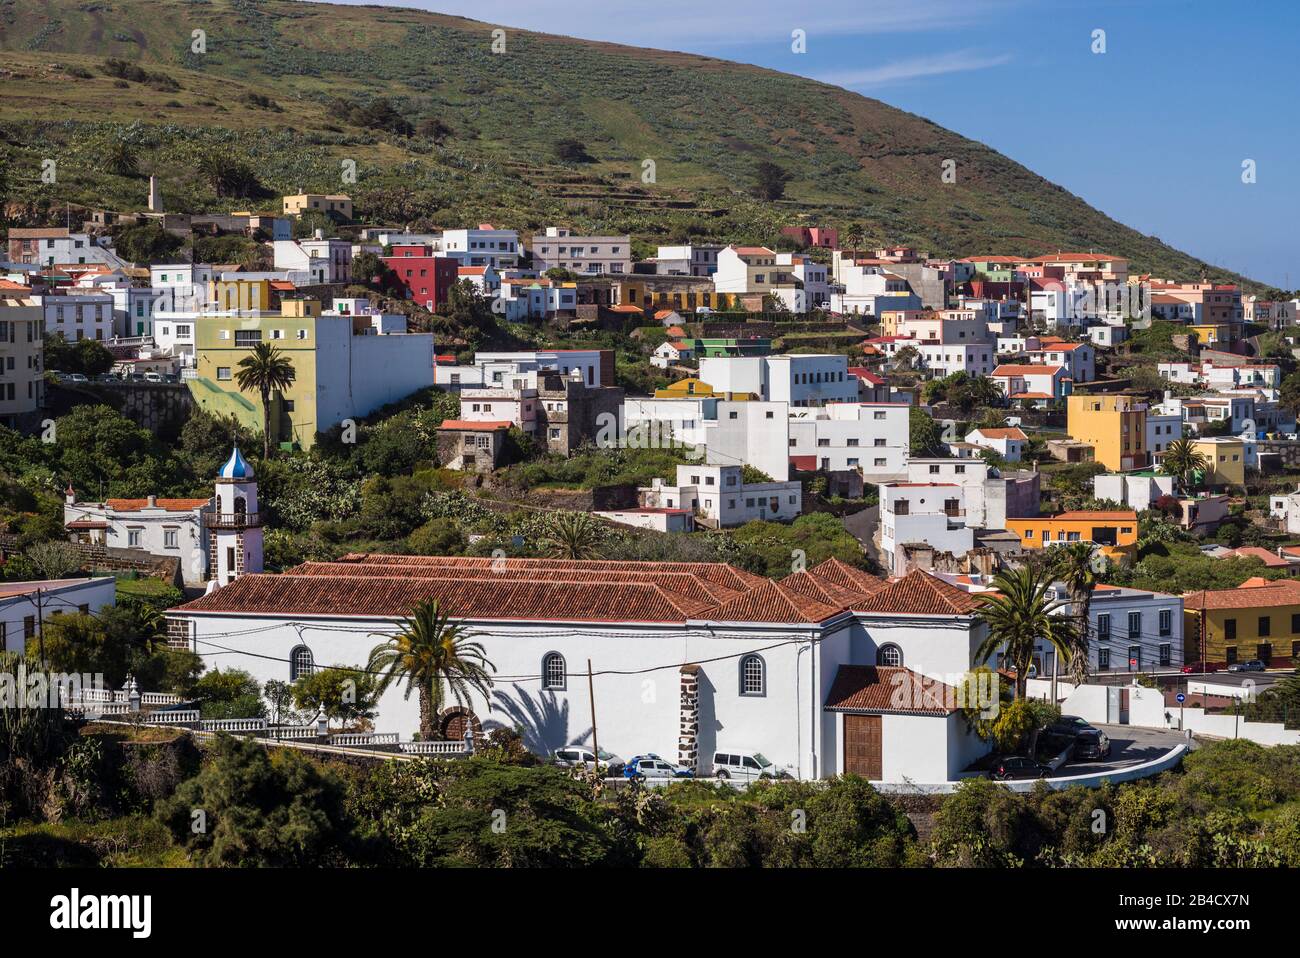 Spain, Canary Islands, El Hierro Island, Valverde, island capital, elevated town view with the Iglesia de Nuestra Senora de la Concepcion church, built in 1767 Stock Photo